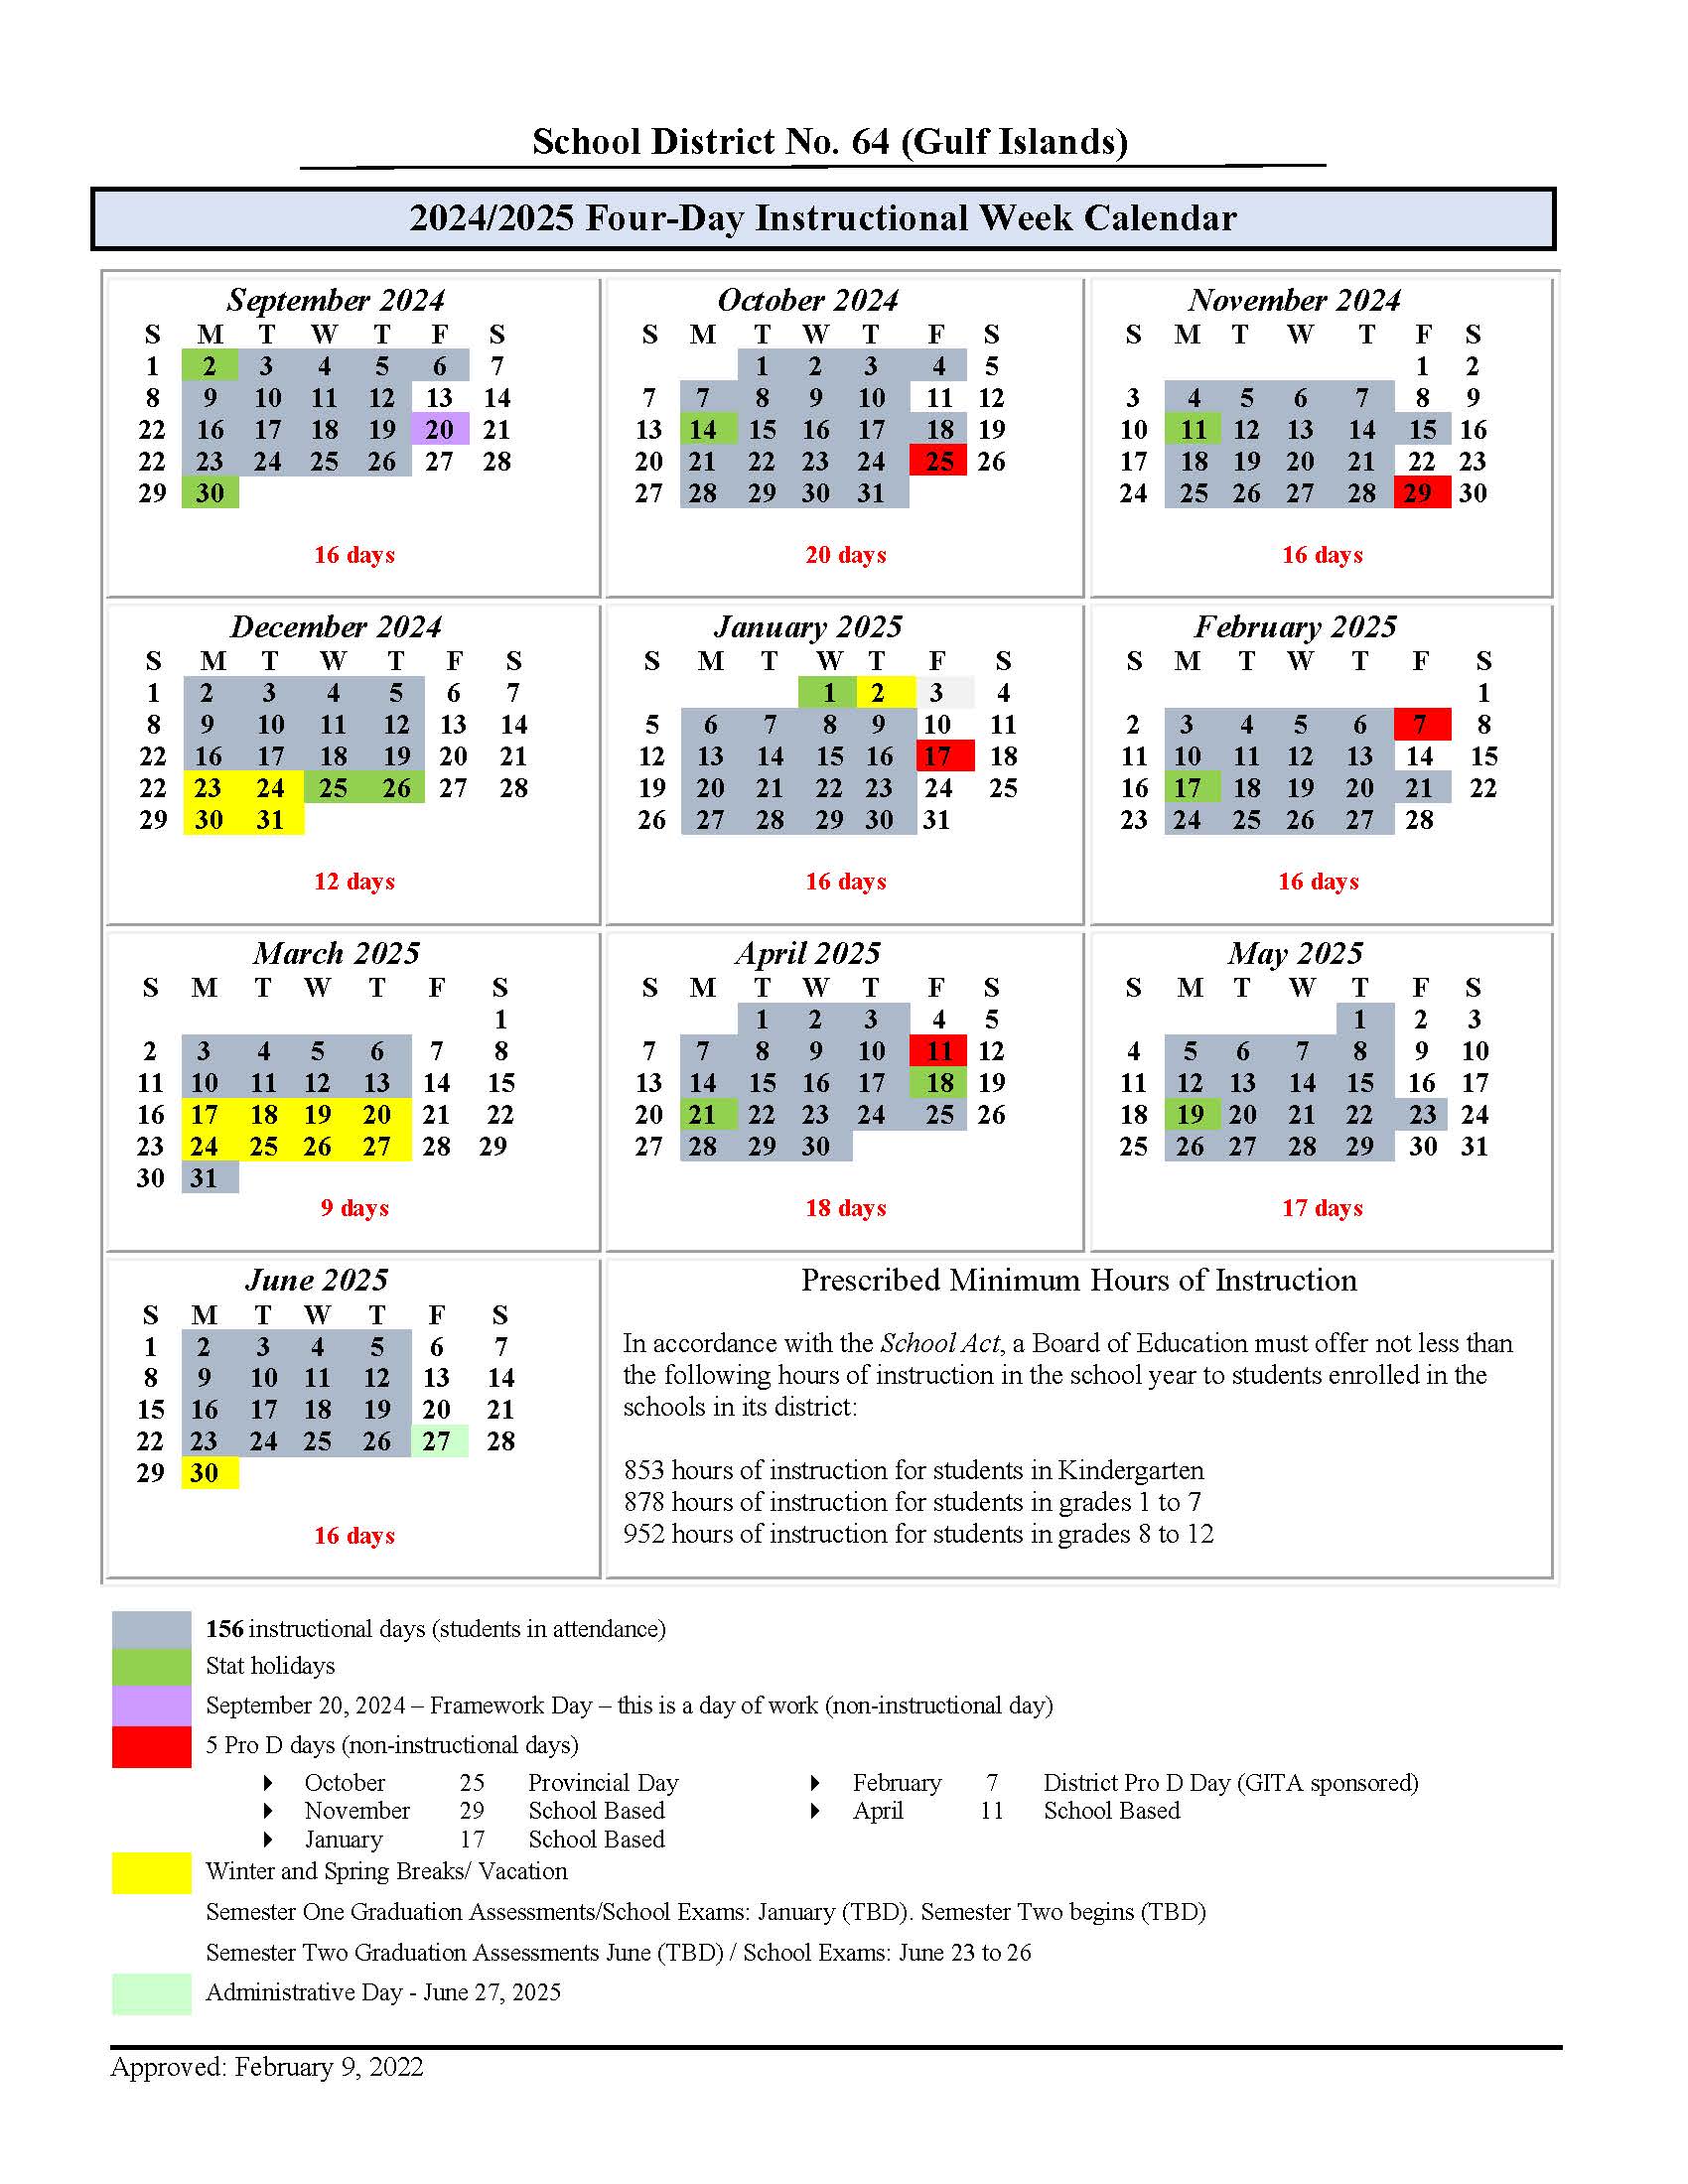 2024-2025-instructional-calendar.9c8e73956.jpg